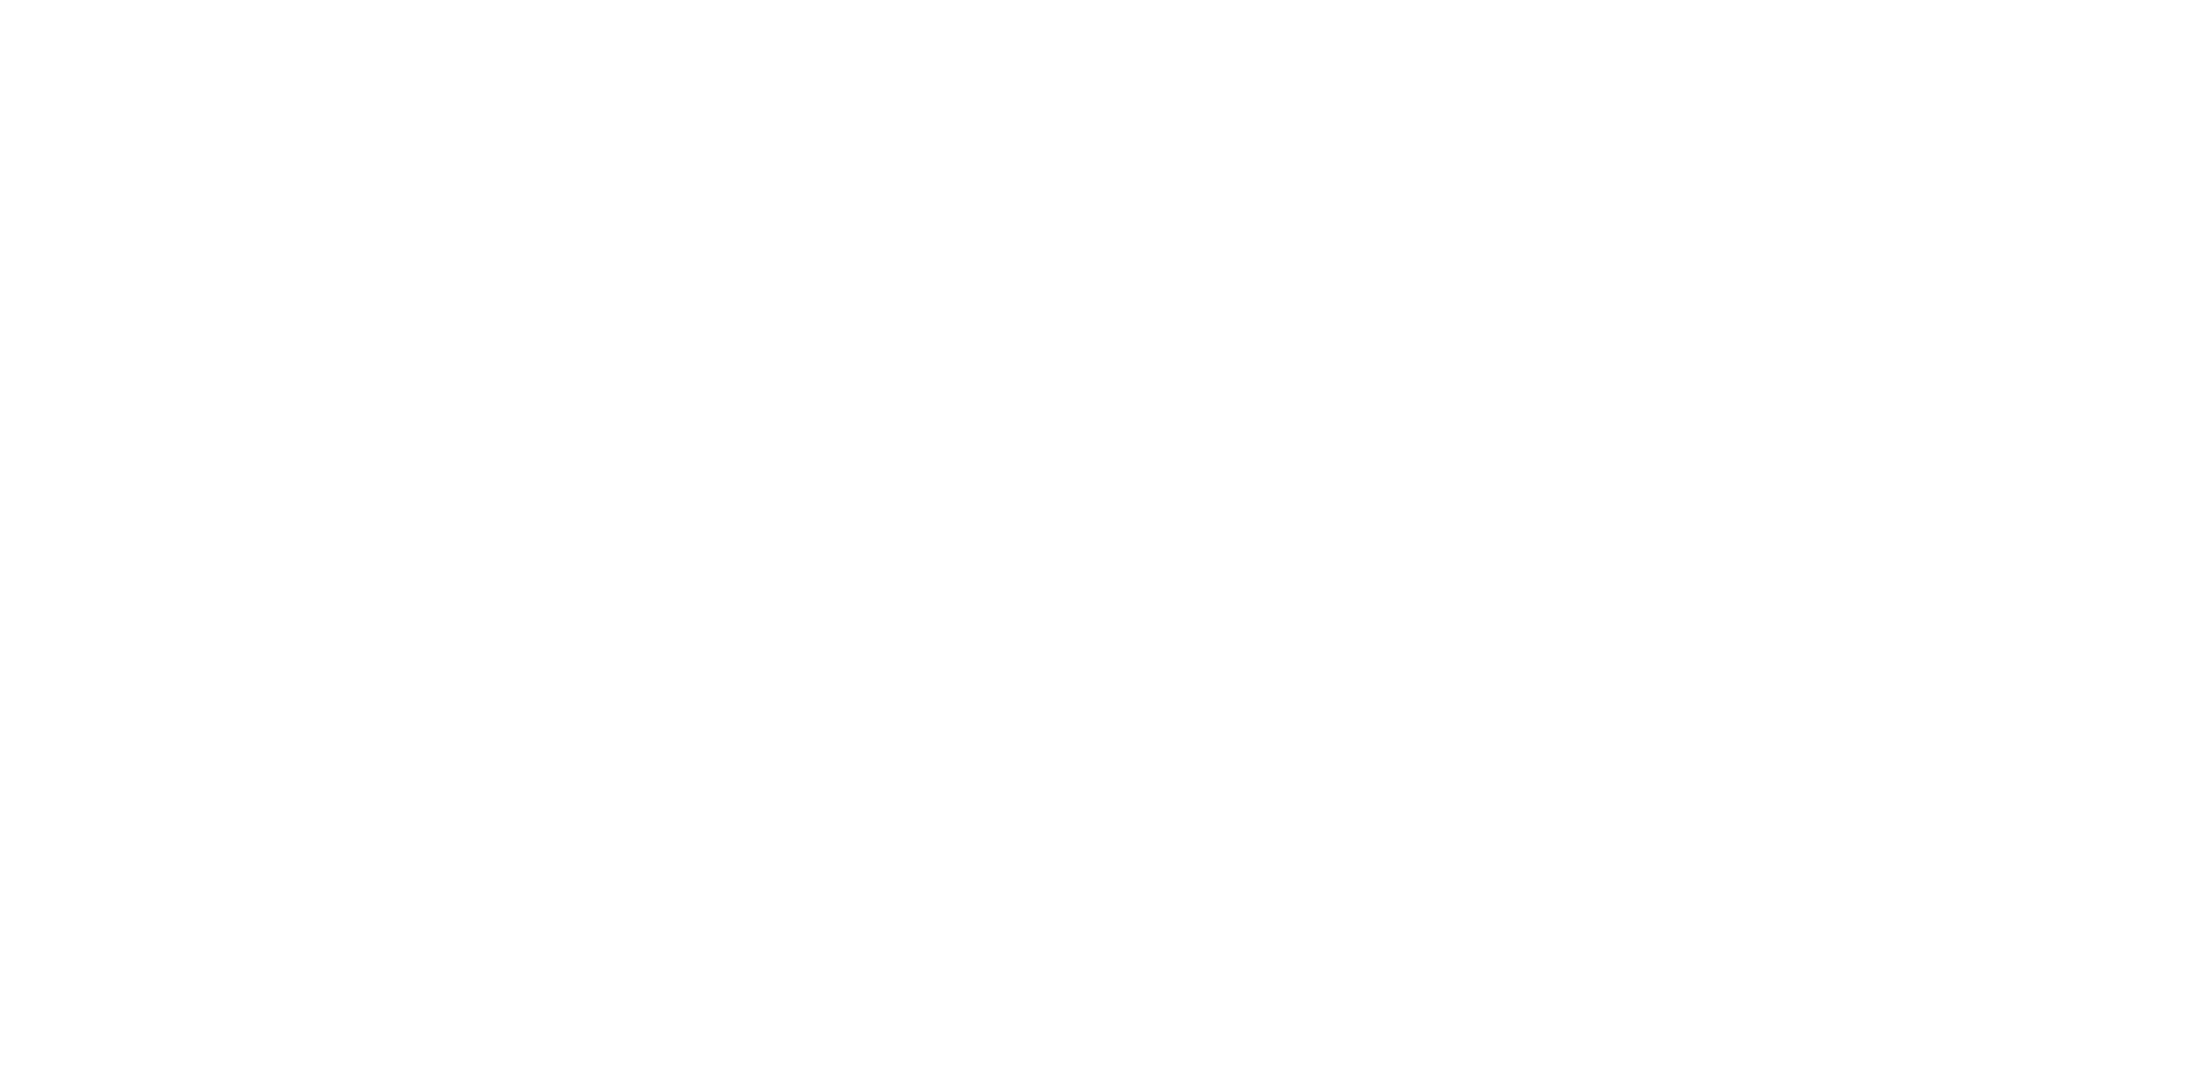 alex-wagner-tonight-logo